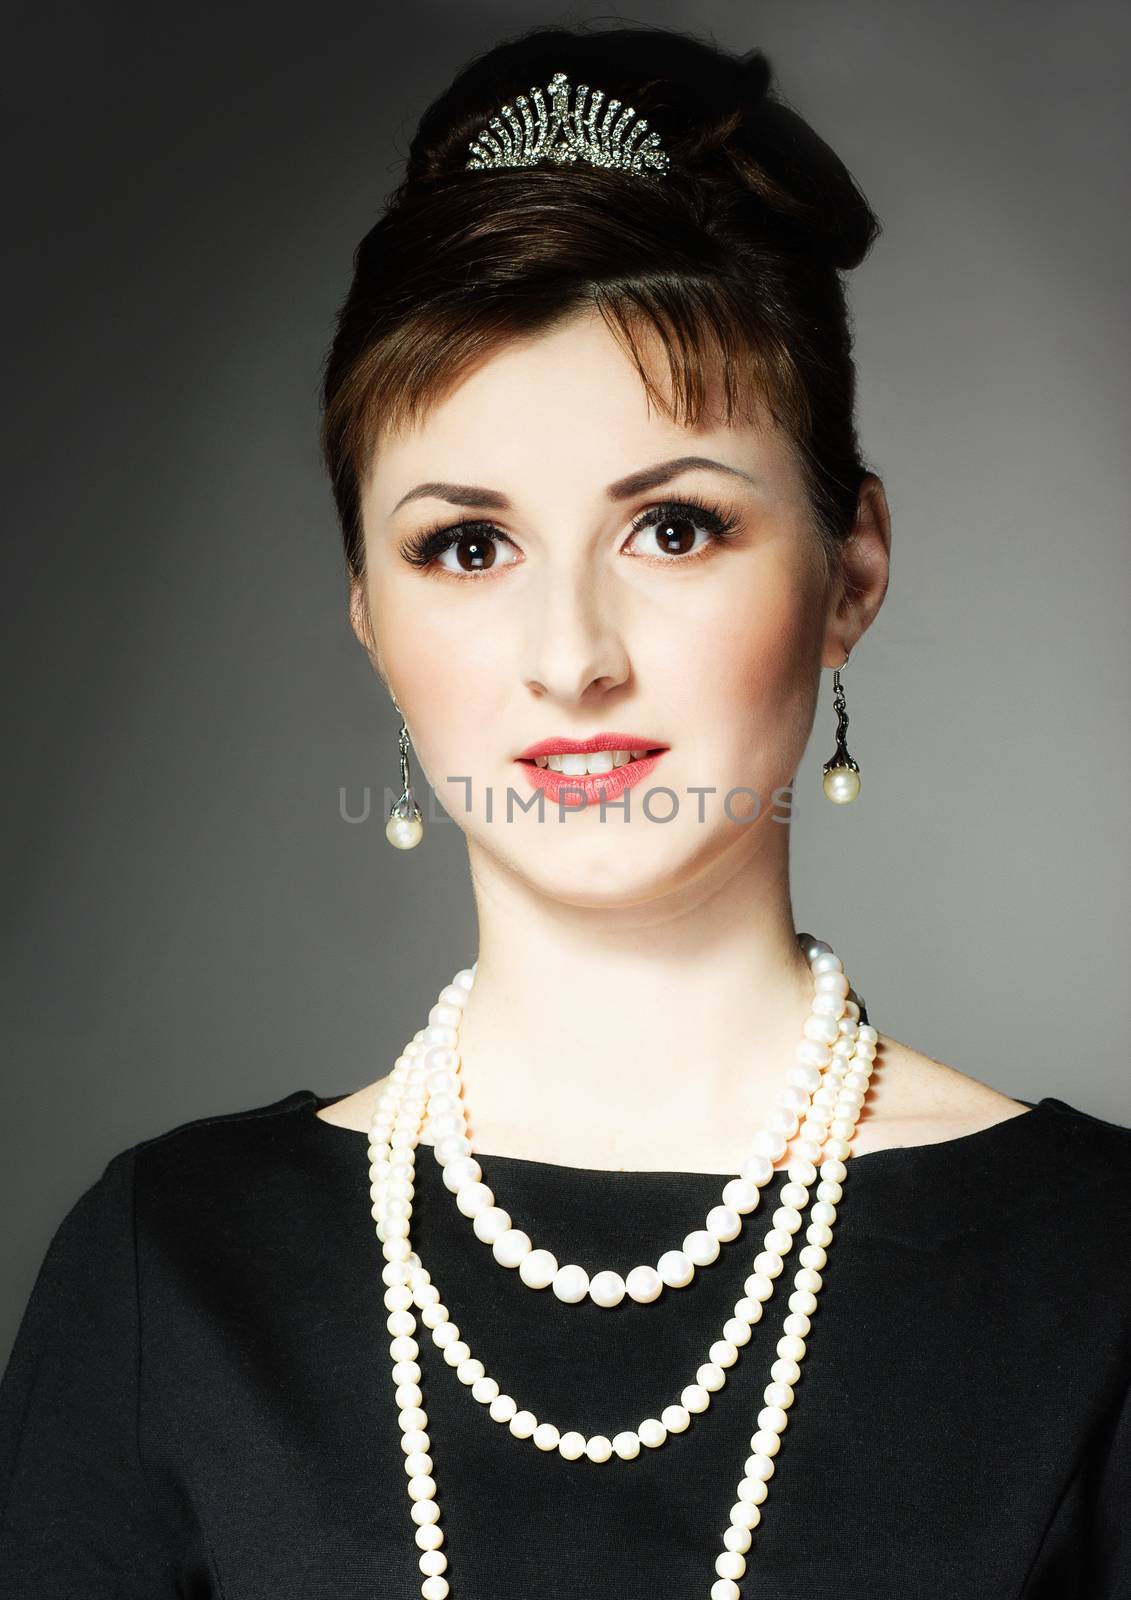 The girl in the image of Audrey Hepburn by natazhekova